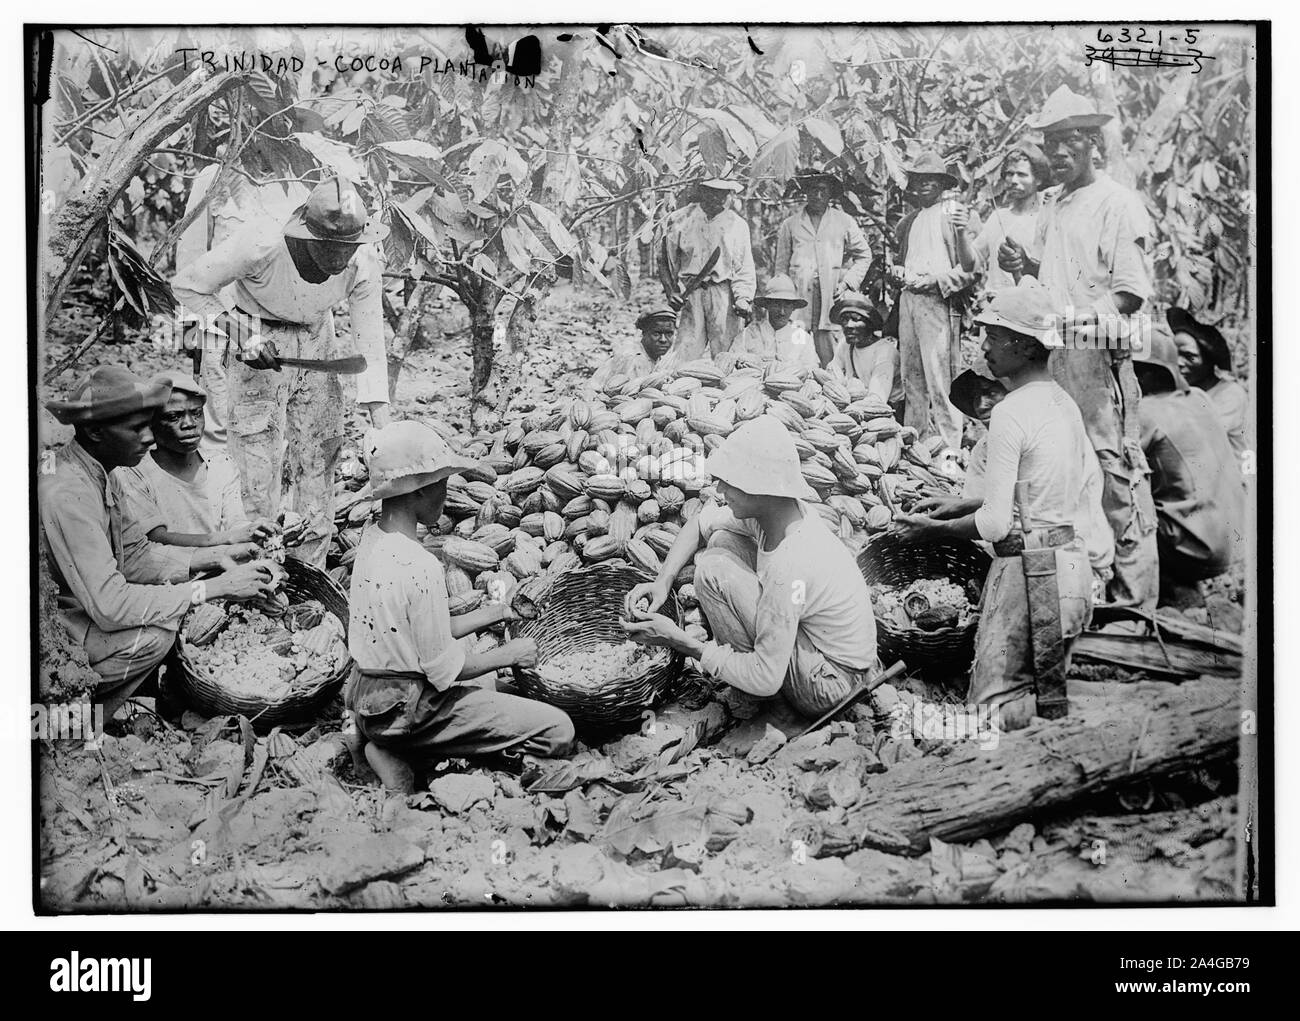 Trinidad -- sorting cocoa beans plantation Stock Photo - Alamy